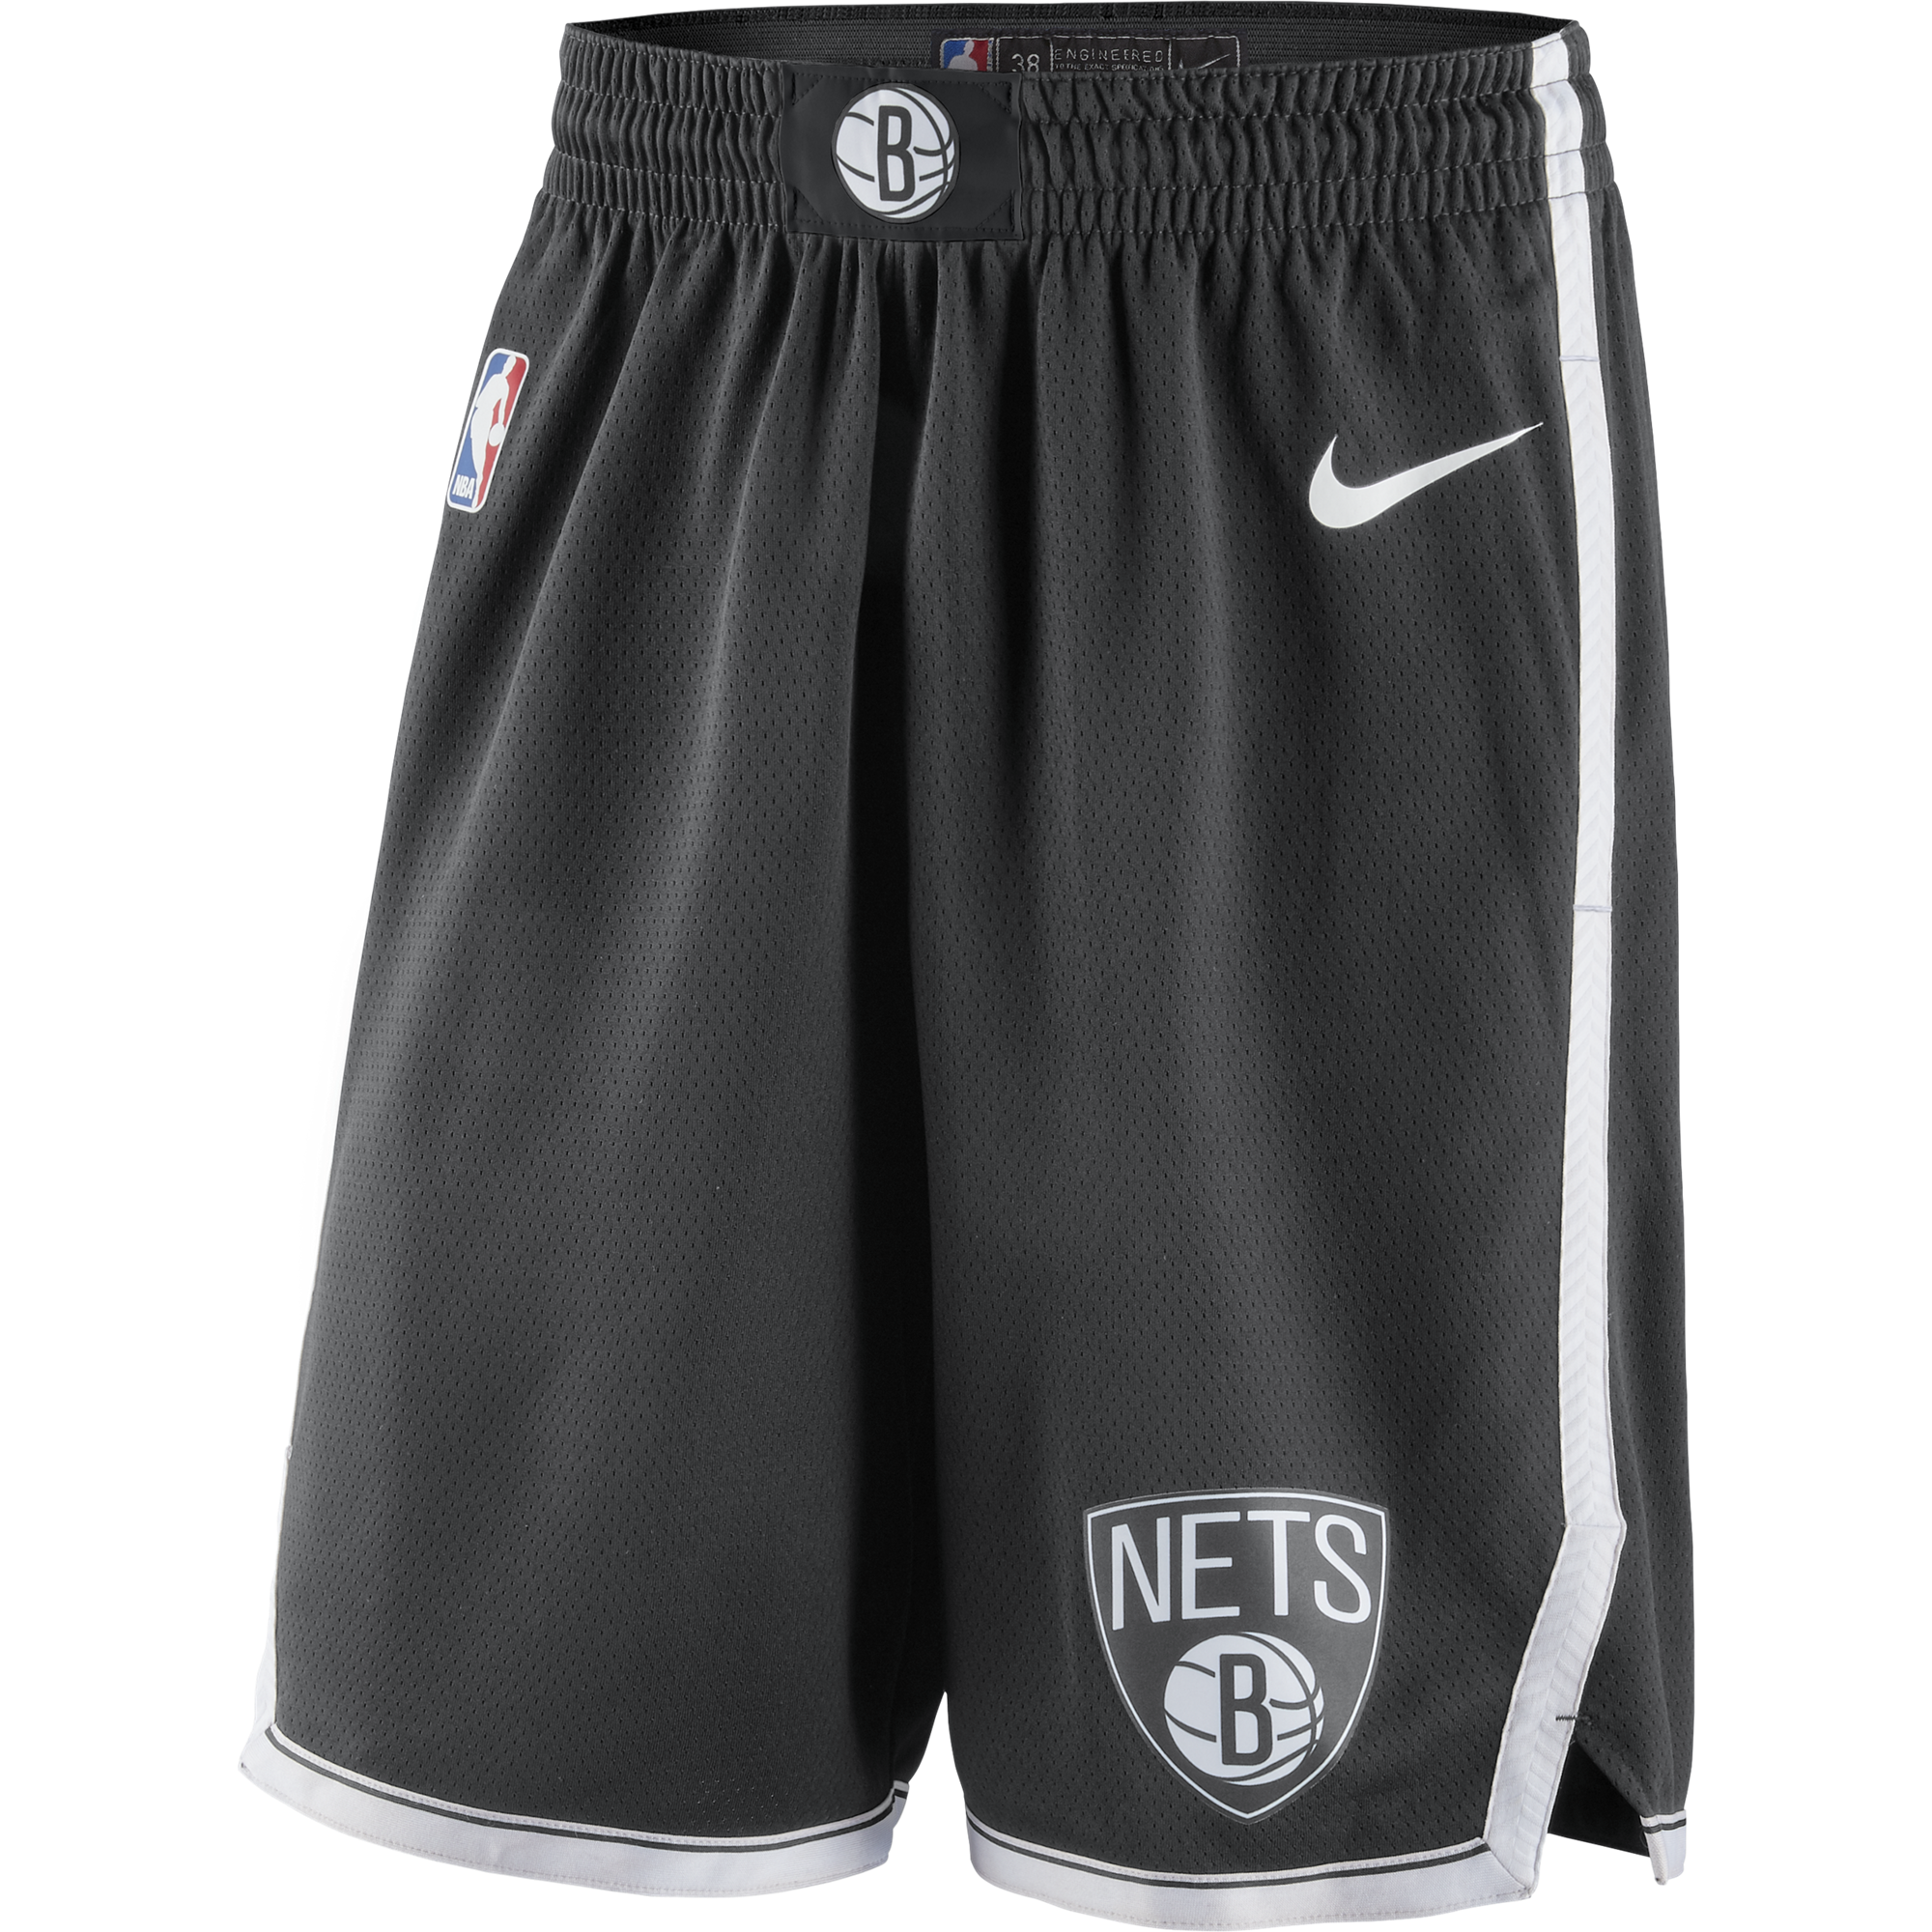 Nike Nba Brooklyn Nets Swingman Road Shorts Fur 60 00 Kicksmaniac Com